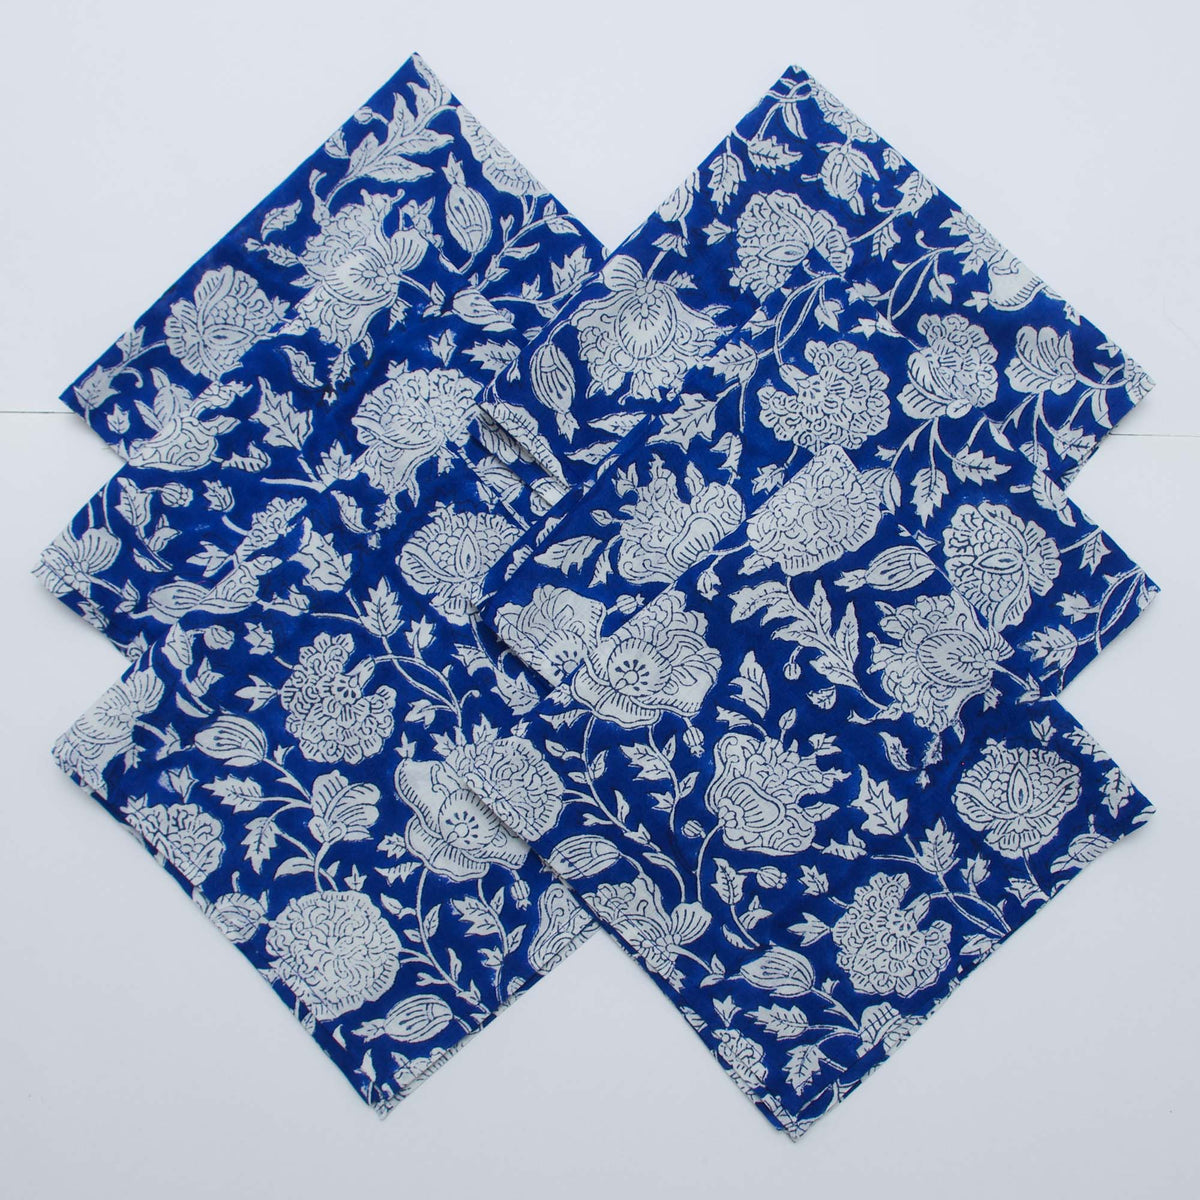 Blaue Dinner-Servietten mit Blumenblockdruck (16 Zoll) – 4er-Set